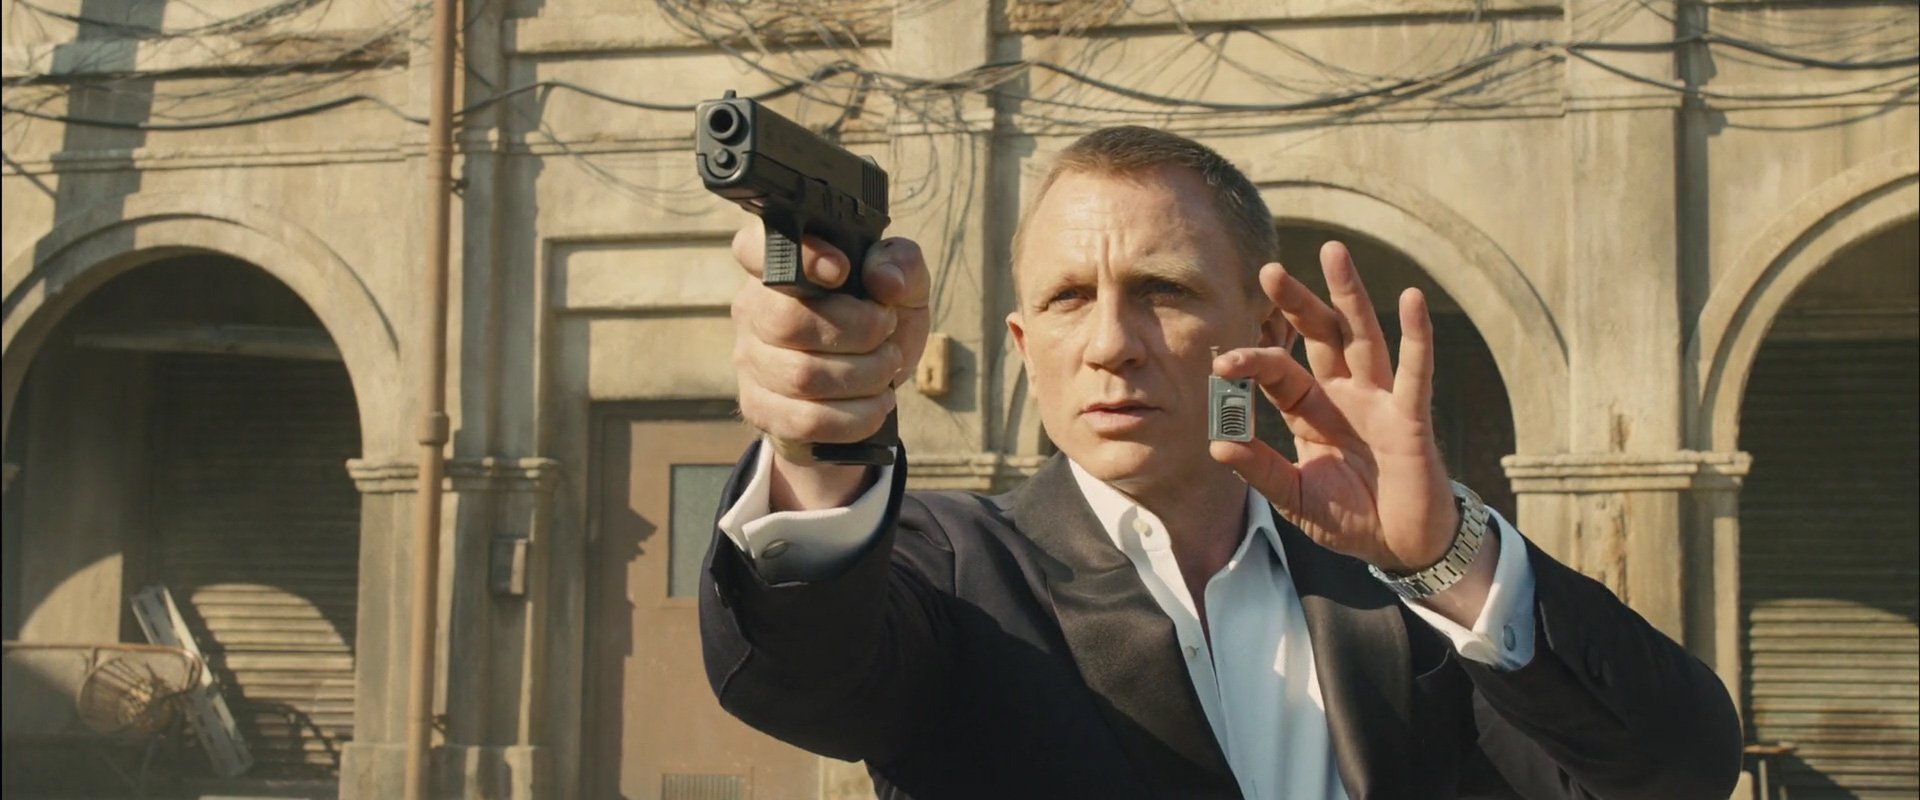 Включи 7 агентов. 007: Координаты Скайфолл. 007: Координаты «Скайфолл» часы Джеймса Бонда.